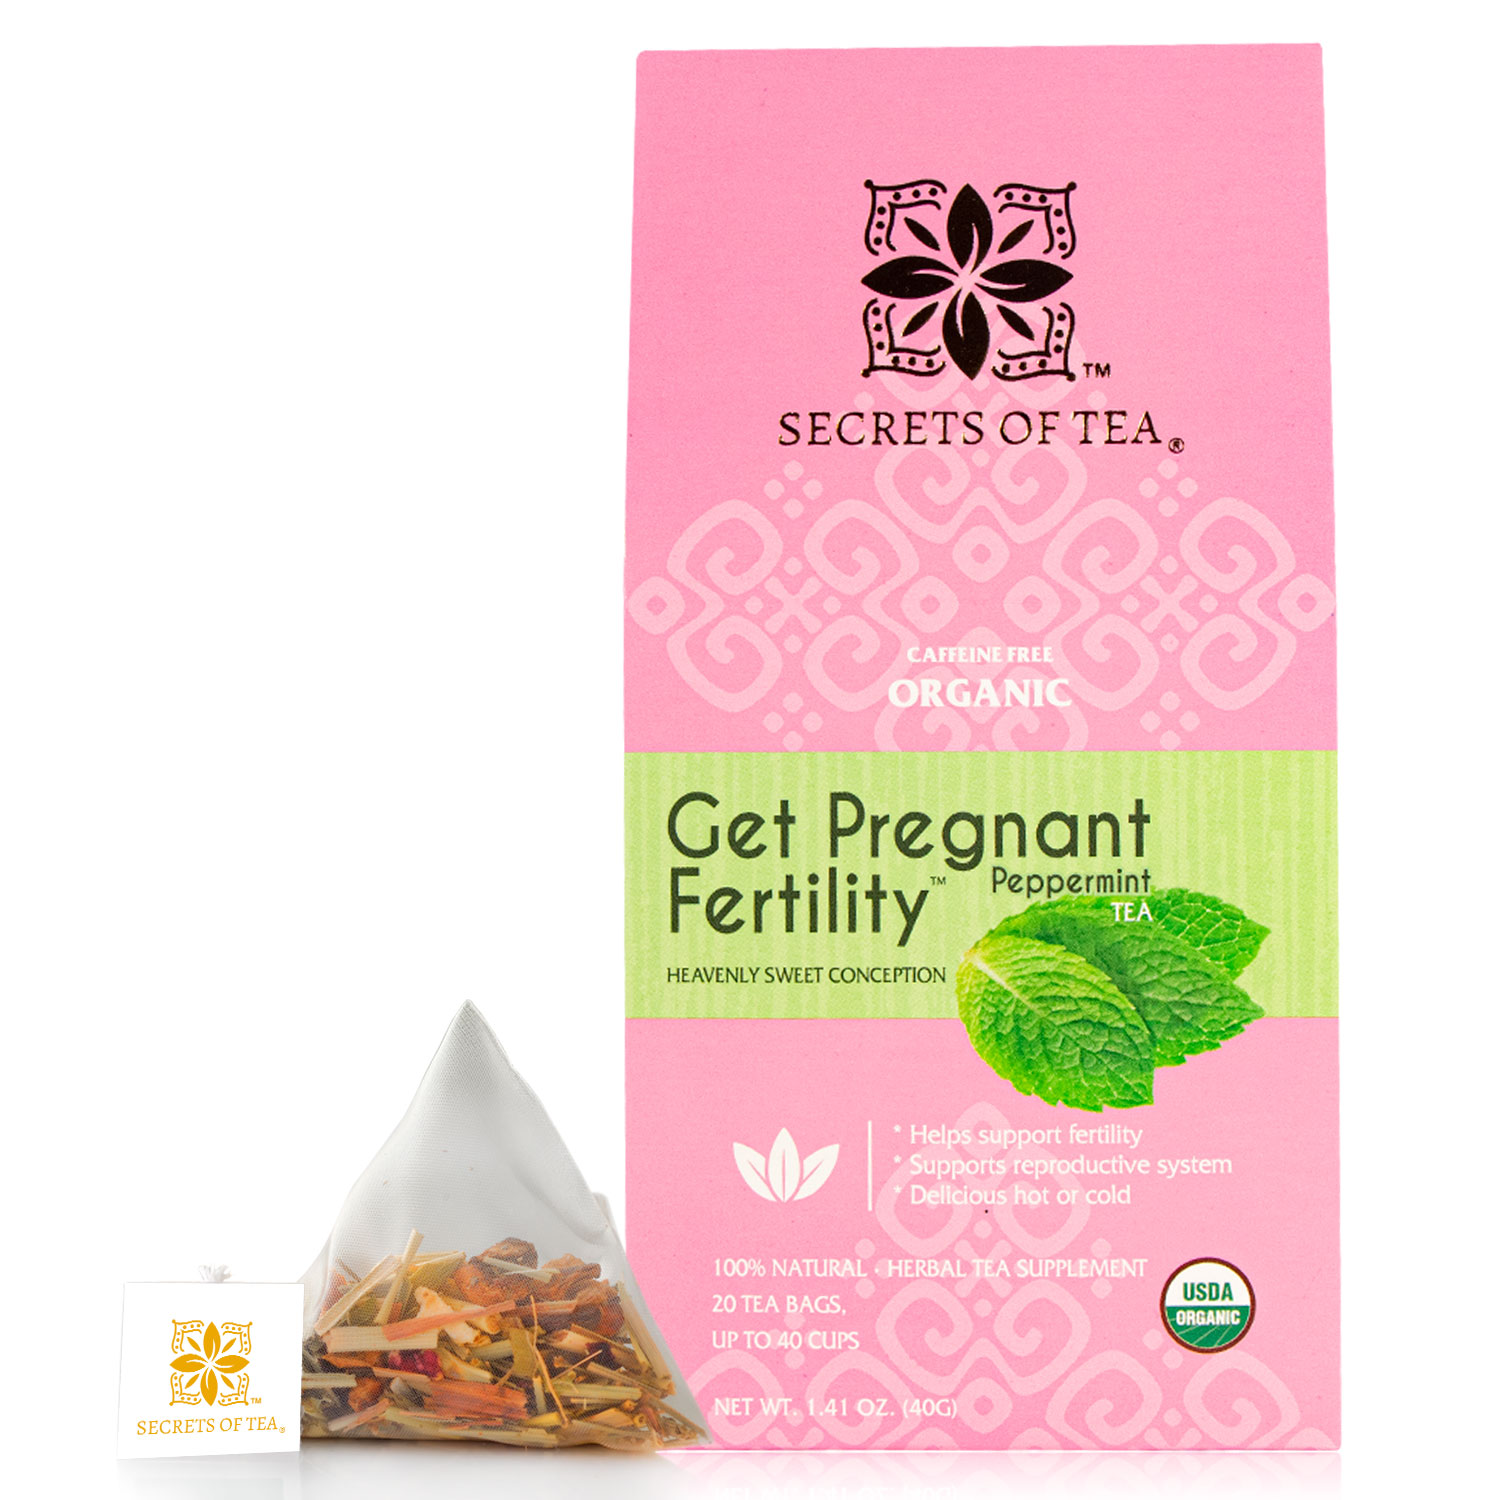 Secrets of Tea Get Pregnant Fertility Peppermint Tea 2 innerpacks per case 2.0 oz